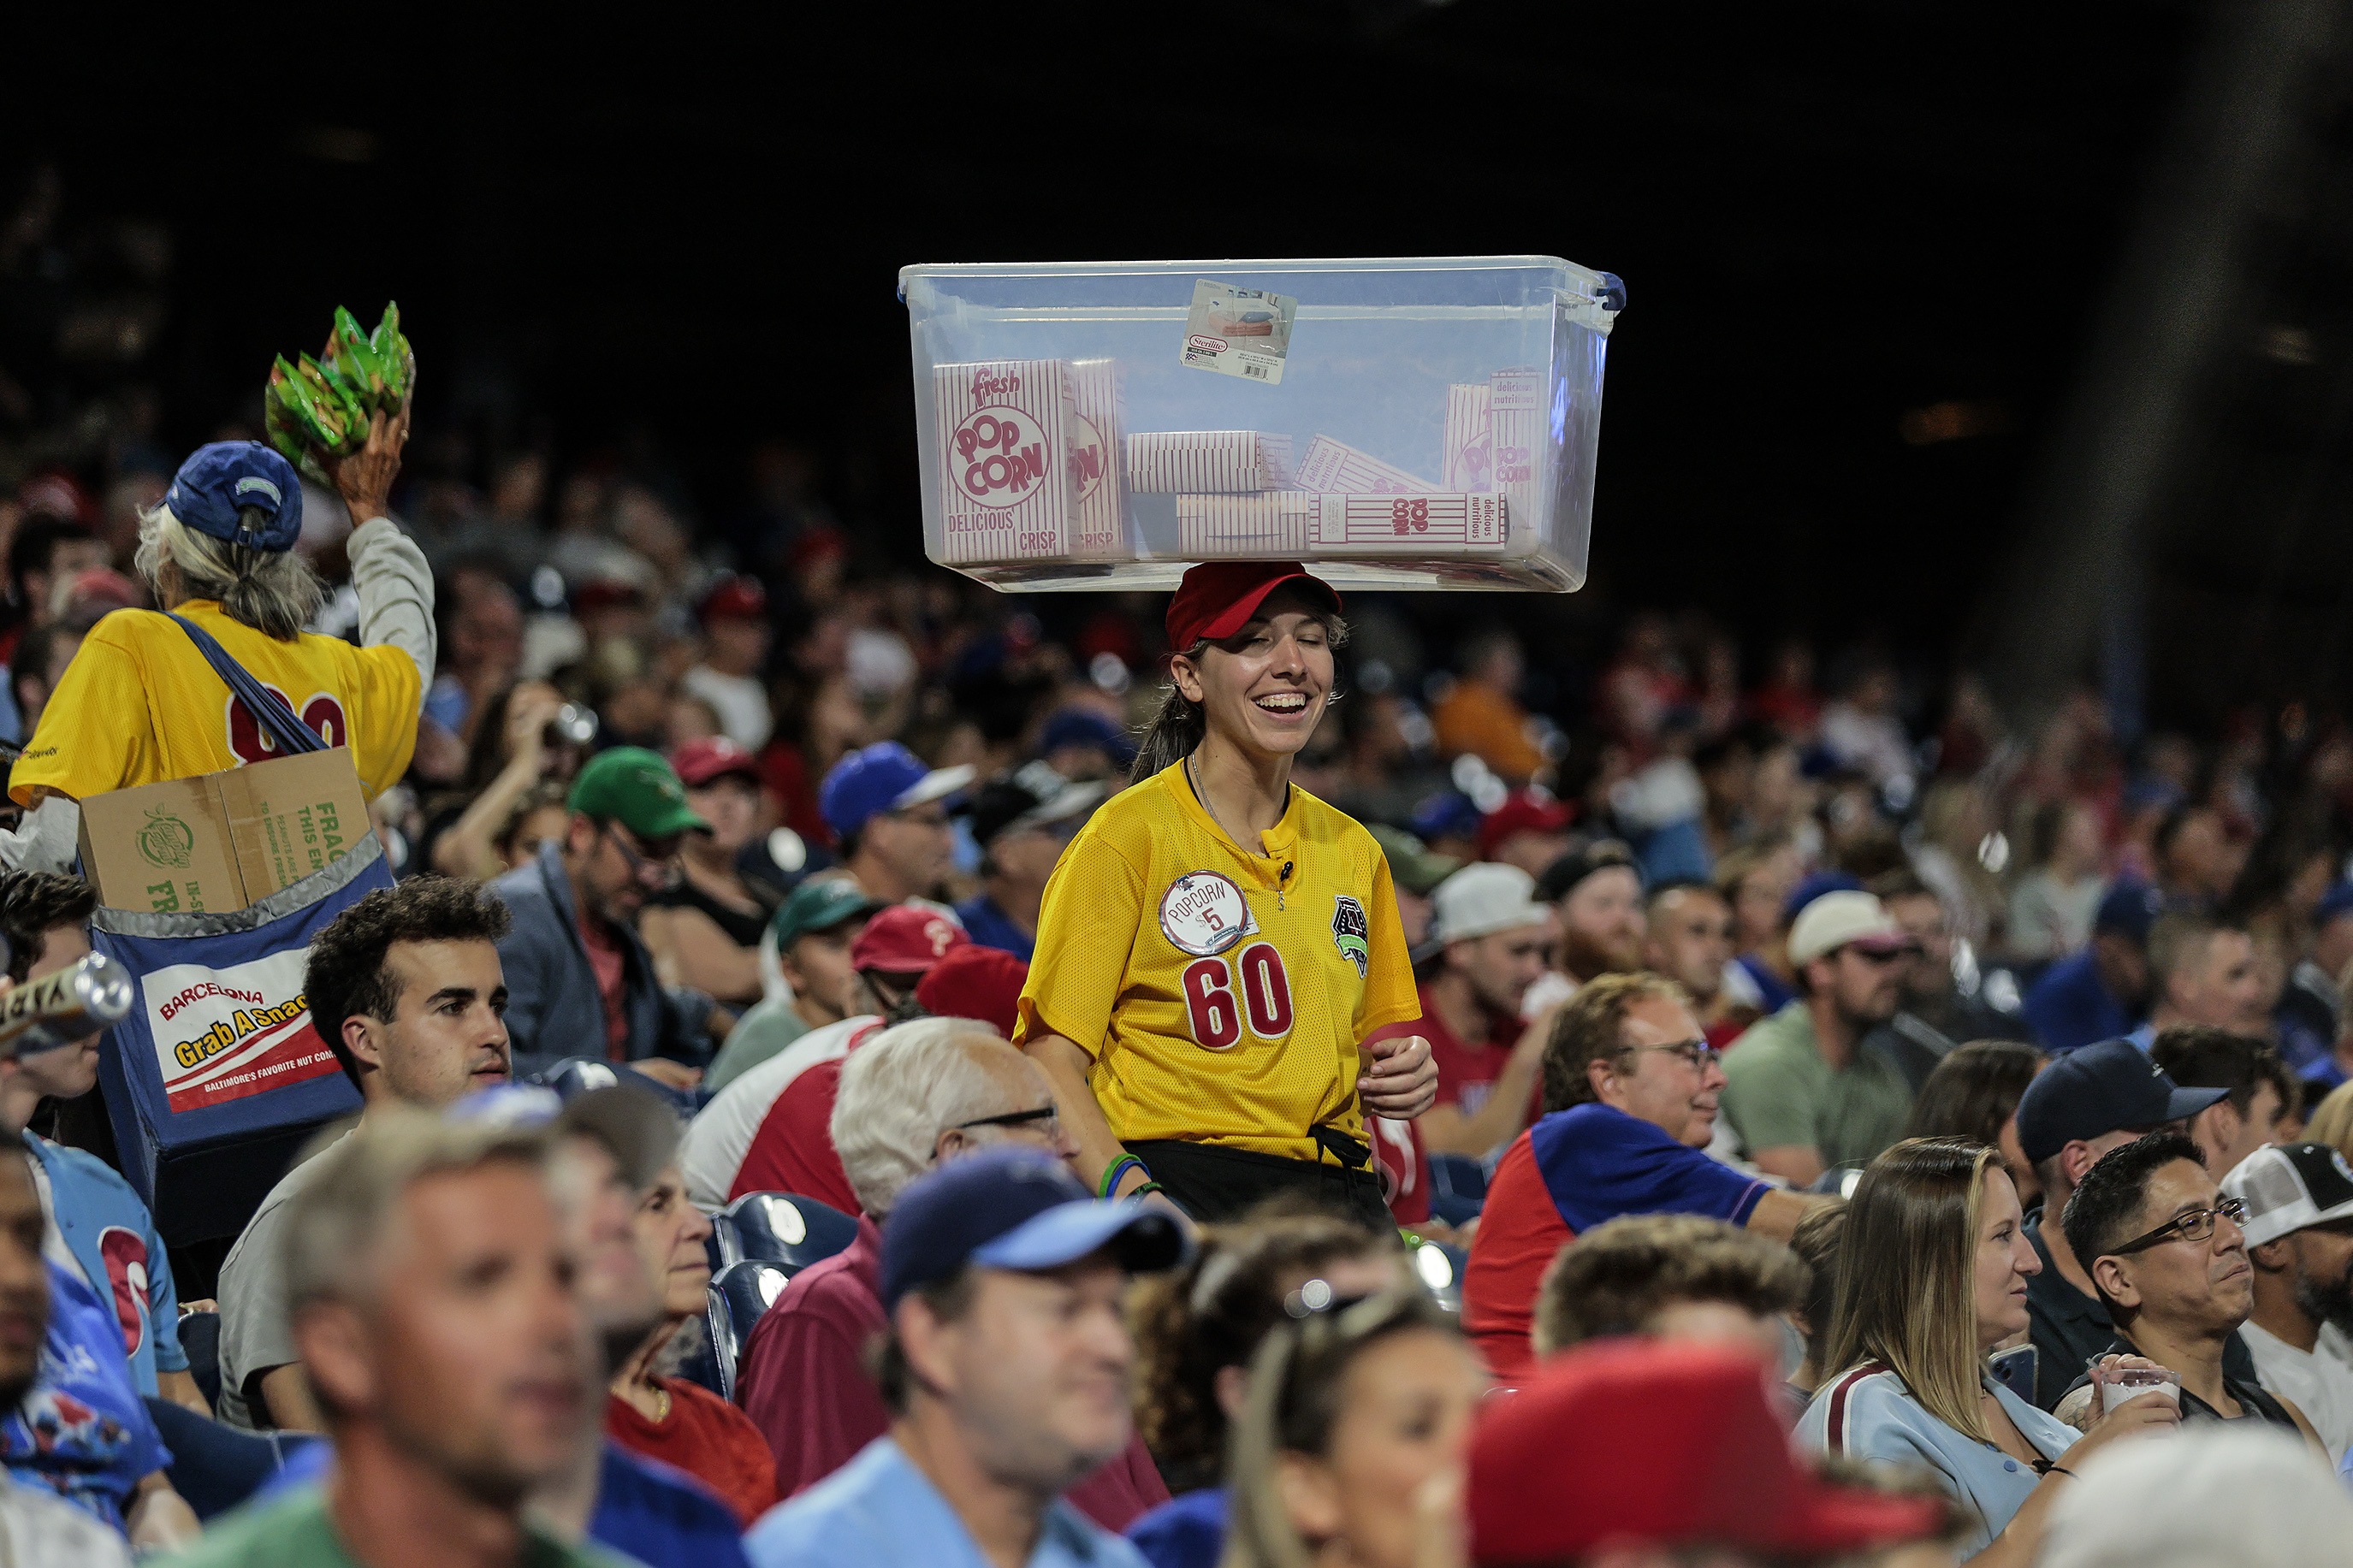 Popcorn vendor turns Phillies games into a balancing act